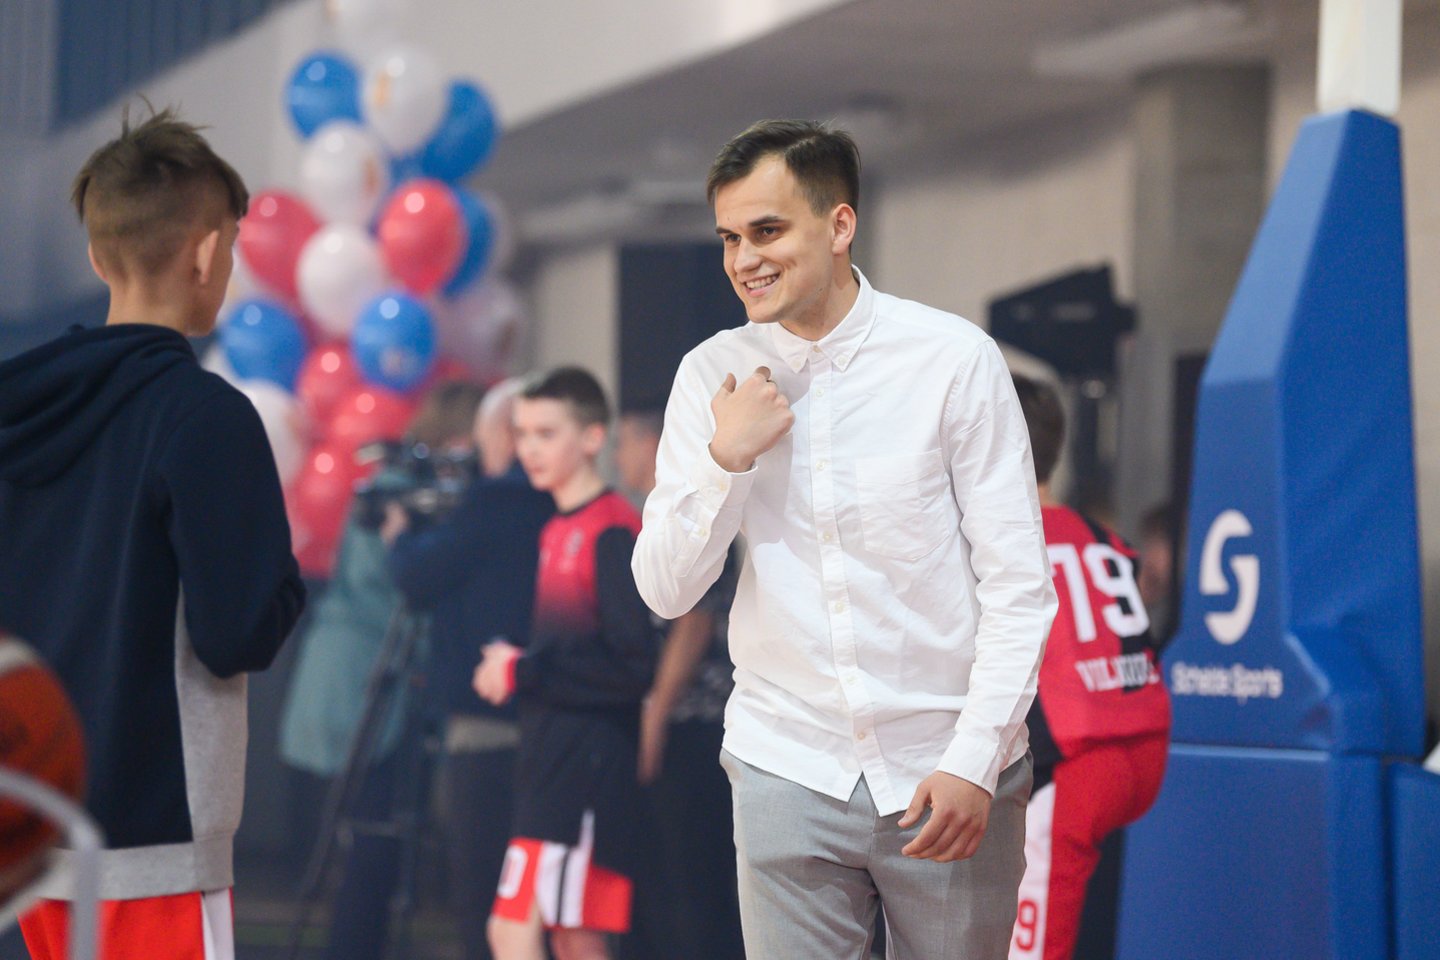 Vilniuje atidaryta NBA mokykla.<br>V.Skaraičio nuotr.